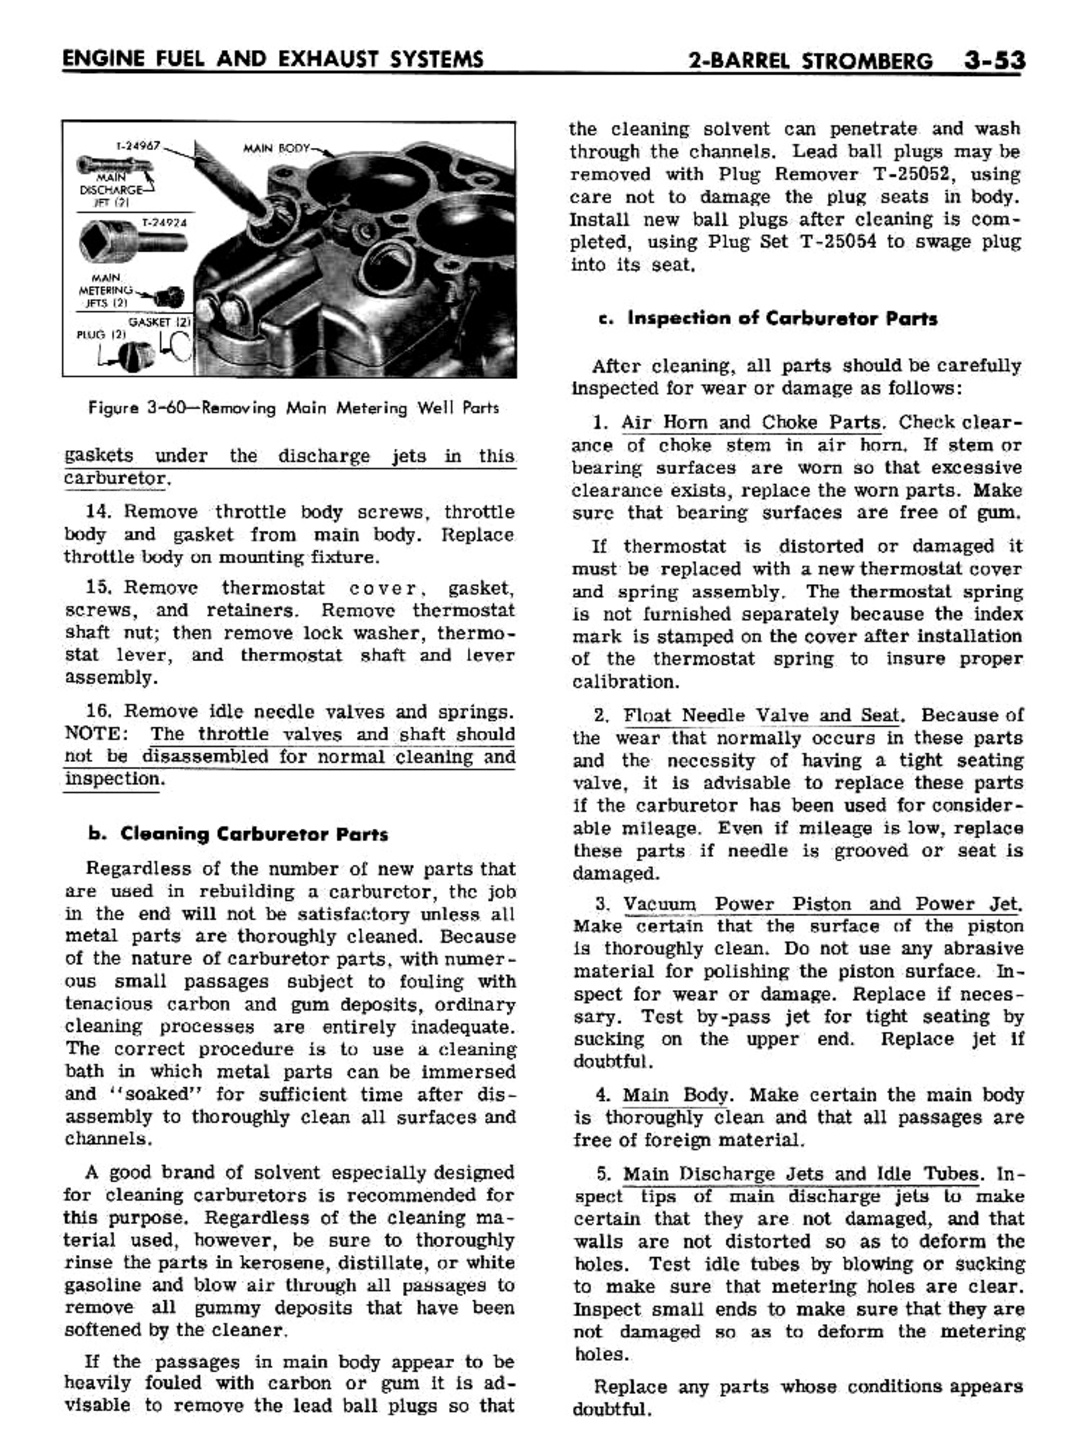 n_04 1961 Buick Shop Manual - Engine Fuel & Exhaust-053-053.jpg